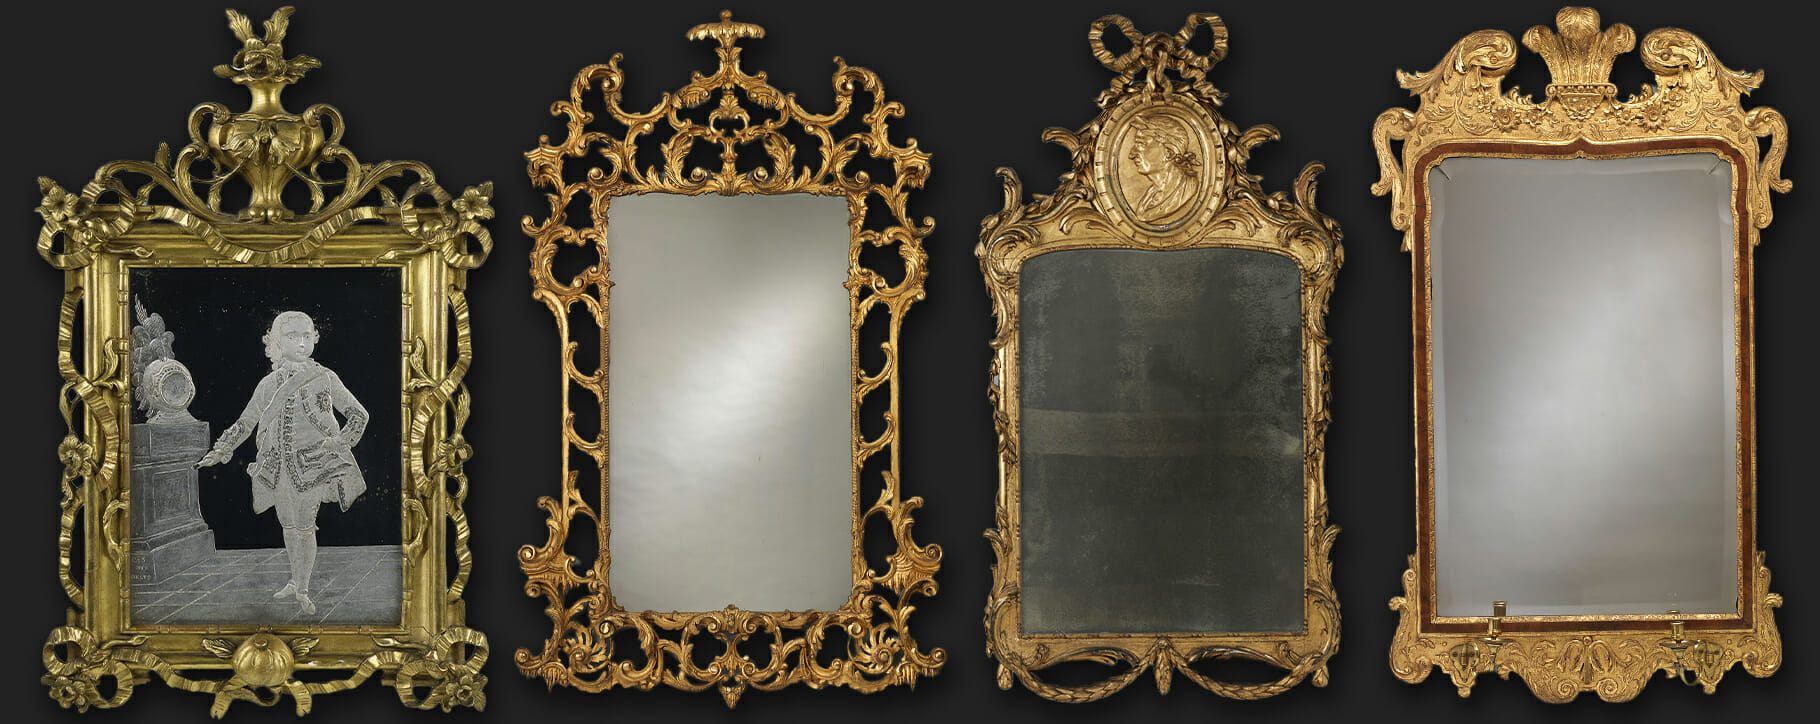 18th century mirror frames